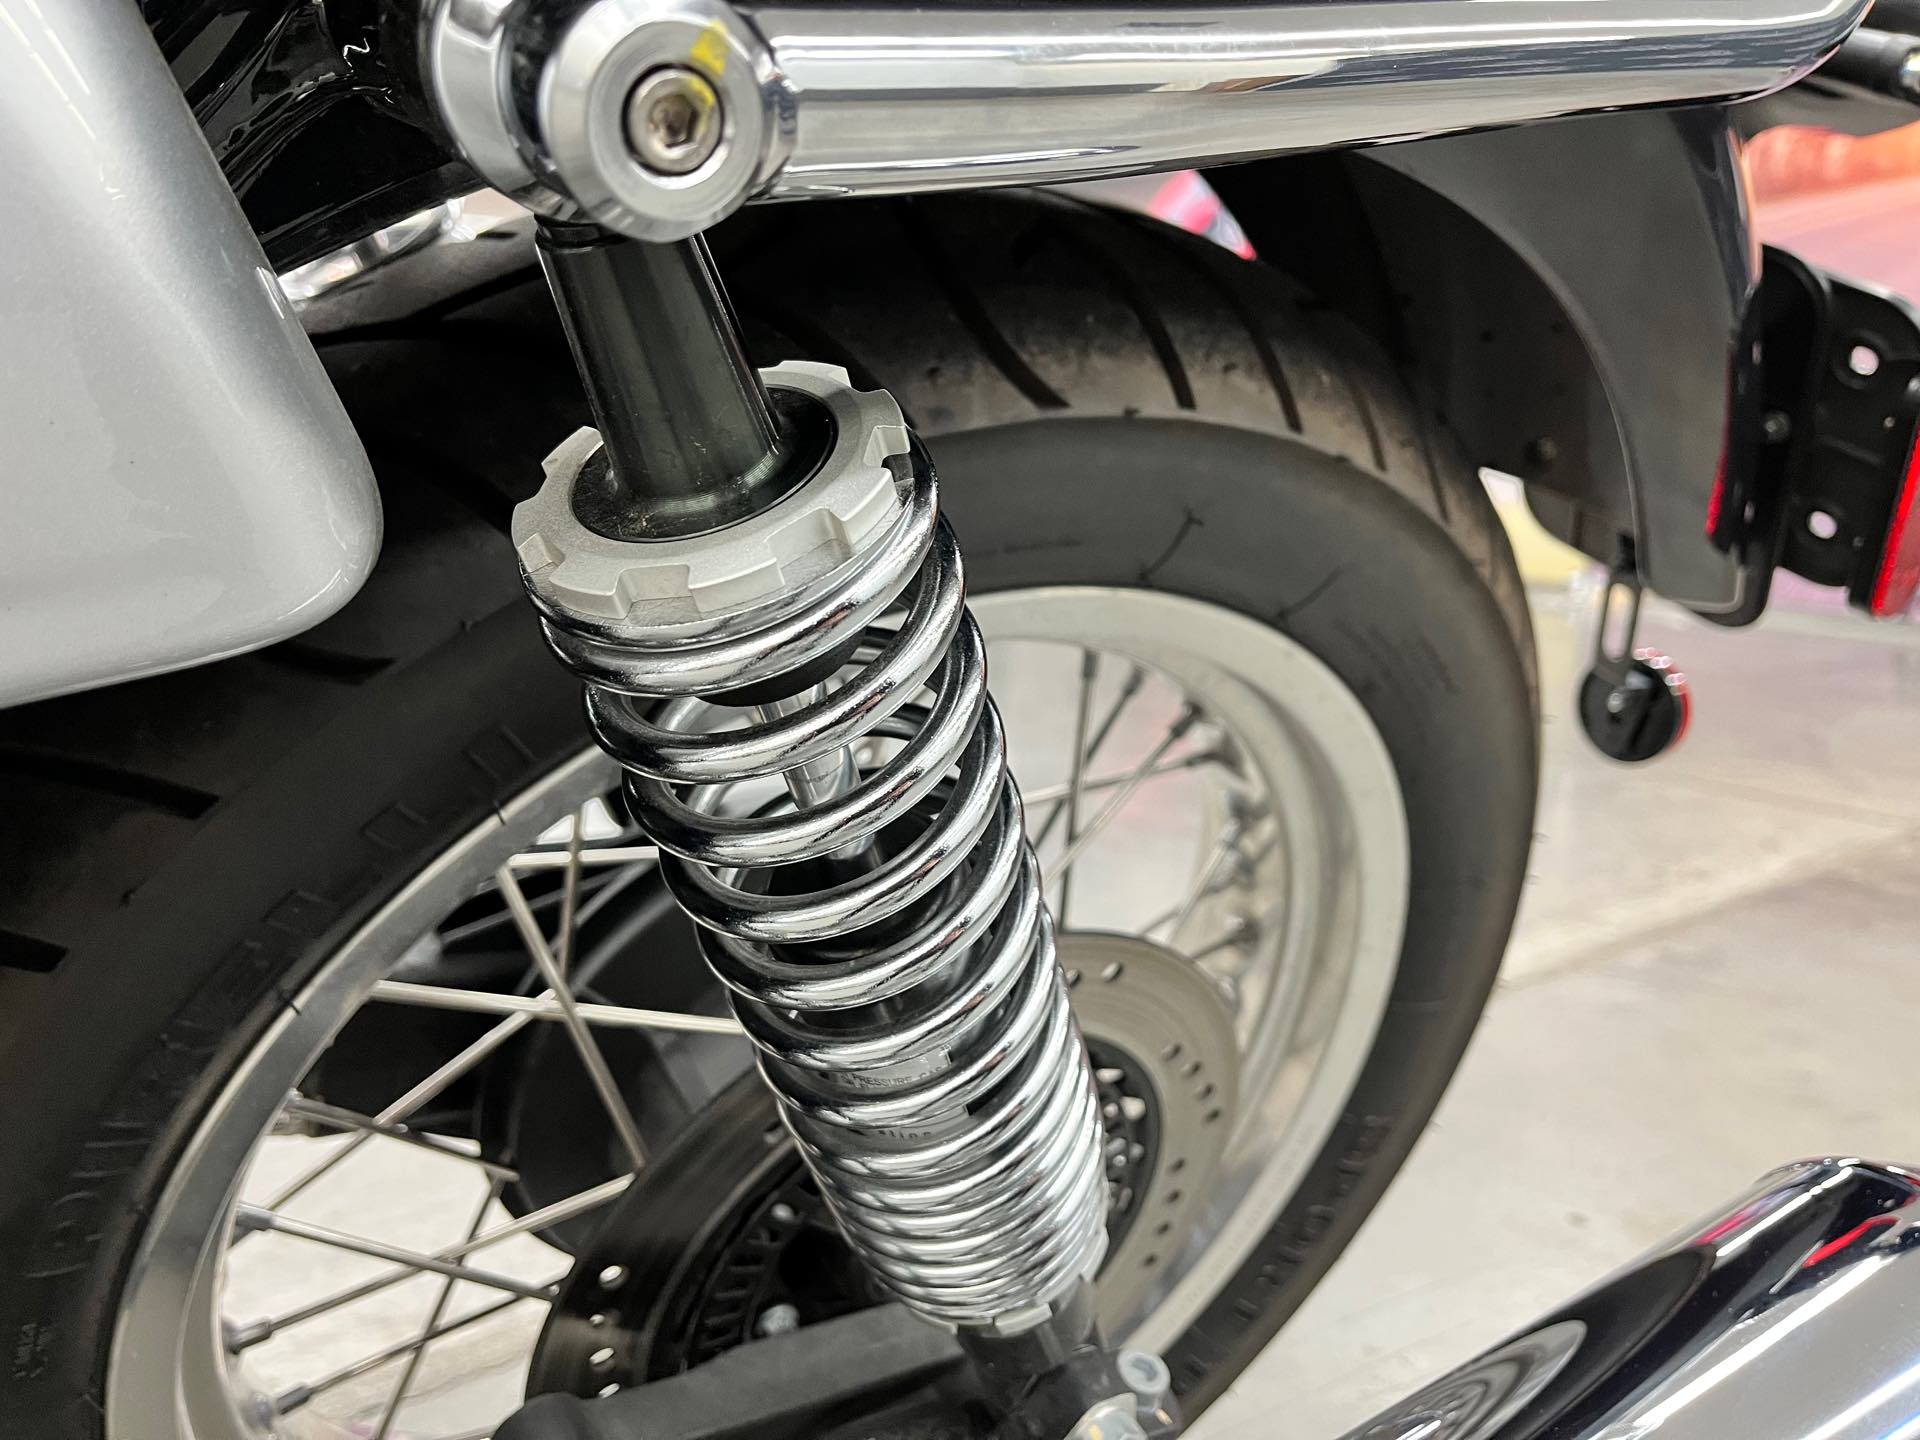 2019 Moto Guzzi V7 III Rough at Aces Motorcycles - Denver